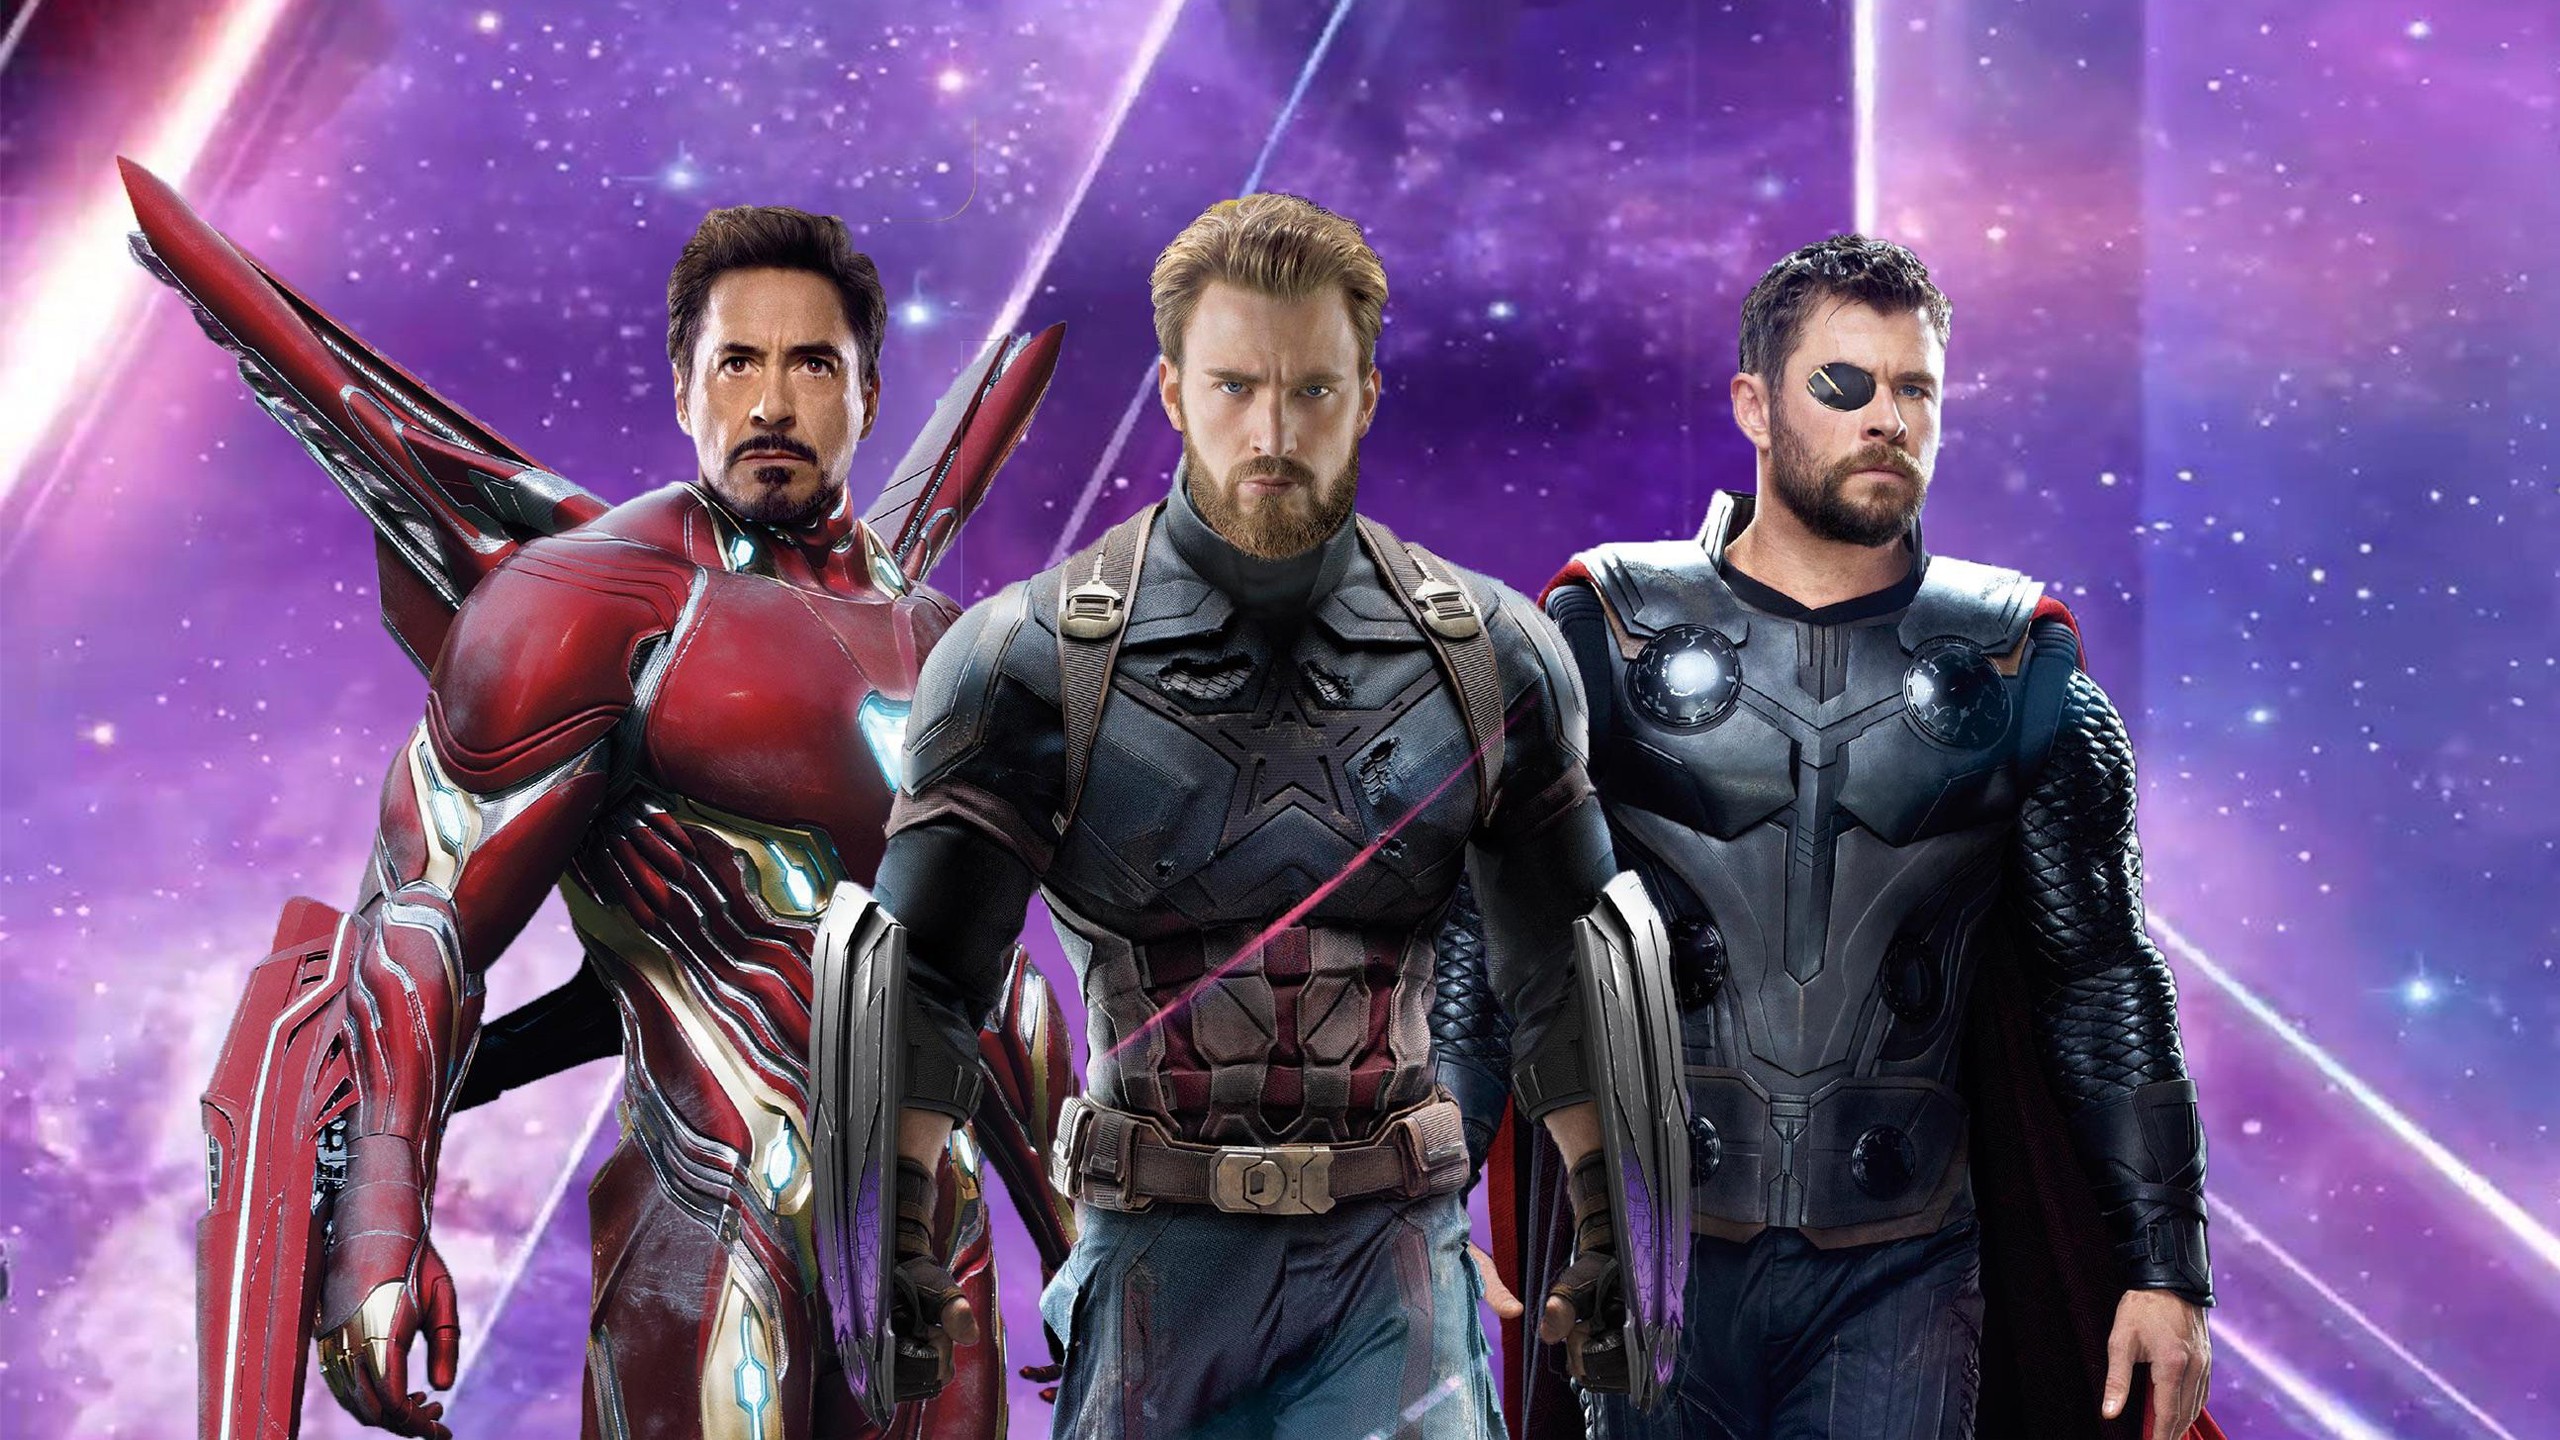 General 2560x1440 Iron Man Tony Stark Captain America Steve Rogers Thor Robert Downey Jr. Chris Evans Chris Hemsworth Marvel Cinematic Universe Avengers: Infinity war frontal view